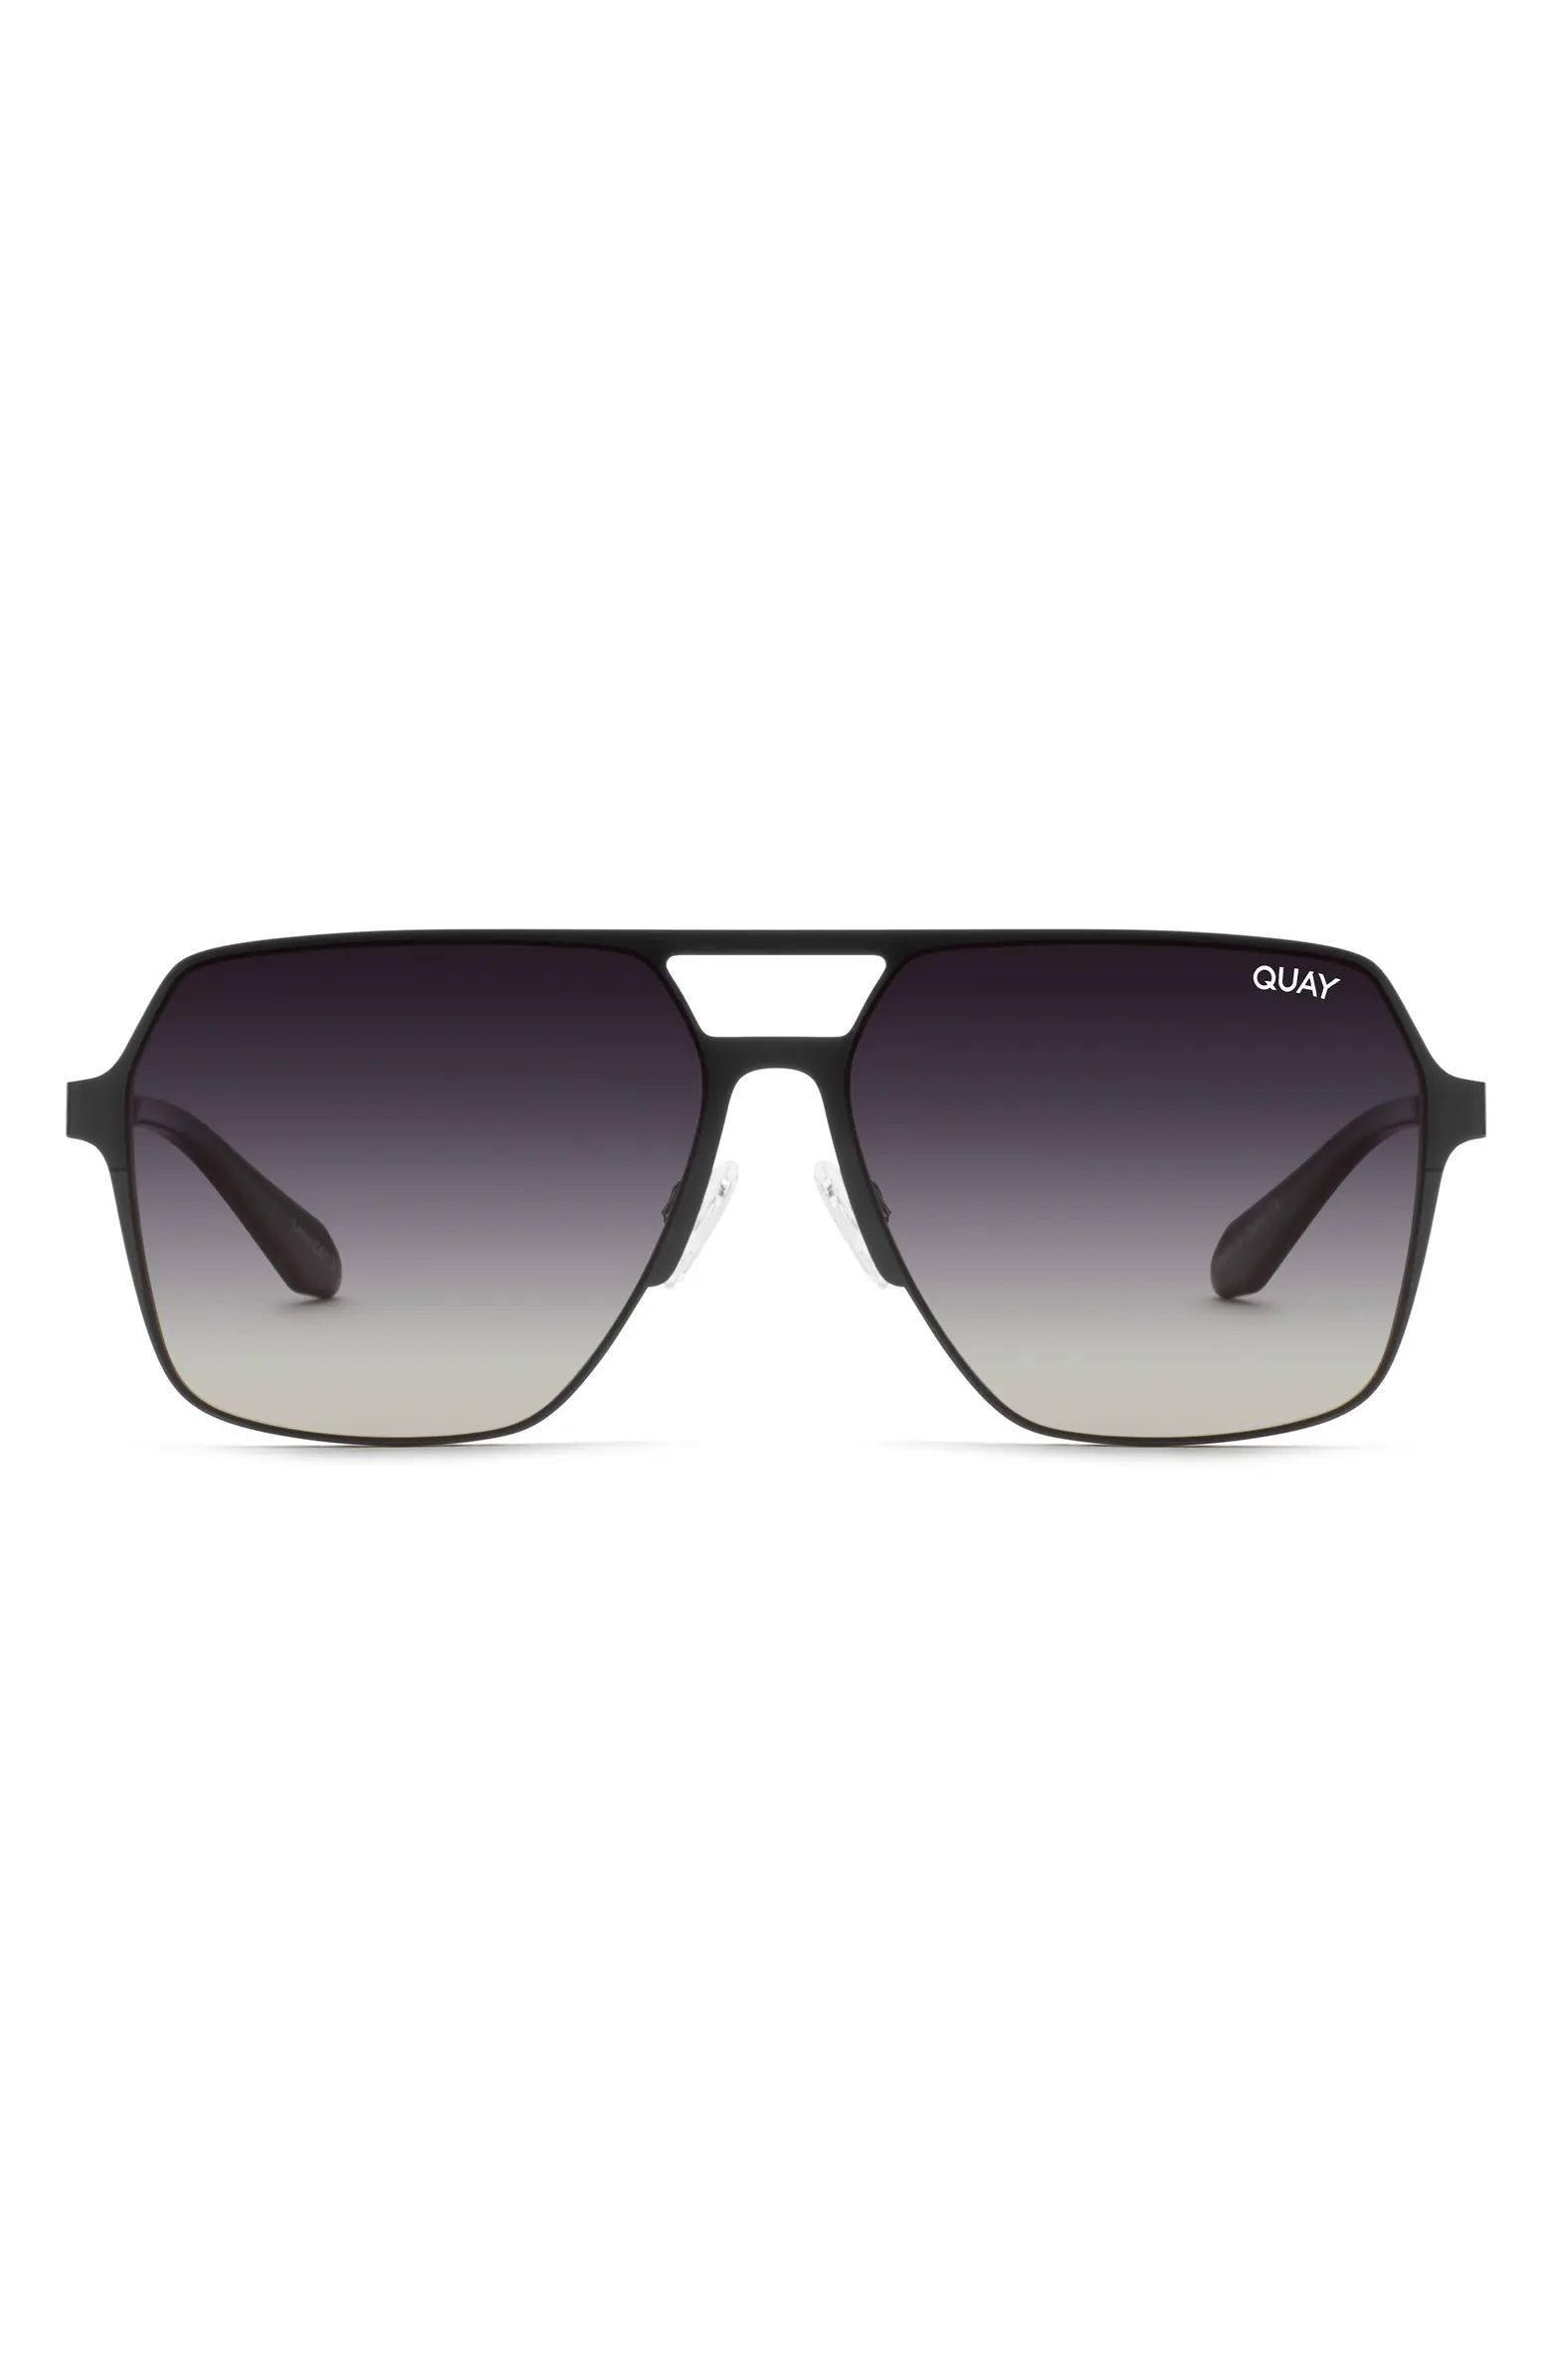 Backstage Pass 52mm Aviator Sunglasses | Nordstrom